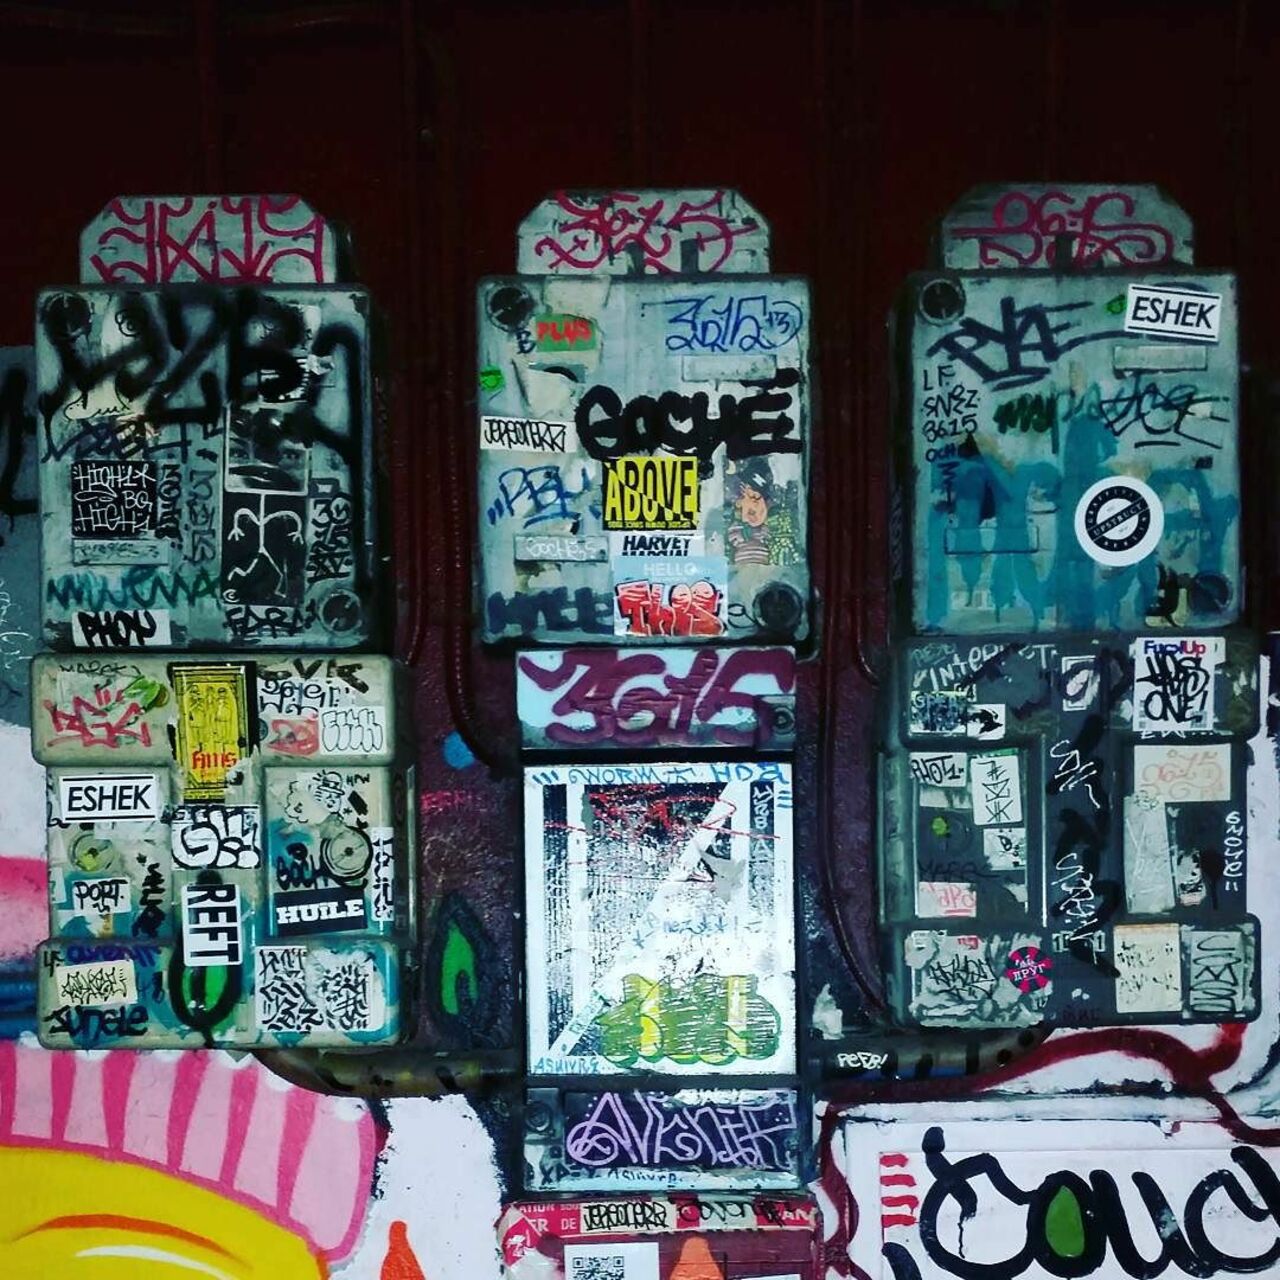 #Paris #graffiti photo by @thisoneart http://ift.tt/1N0J1HB #StreetArt https://t.co/mRAVLjz2JW